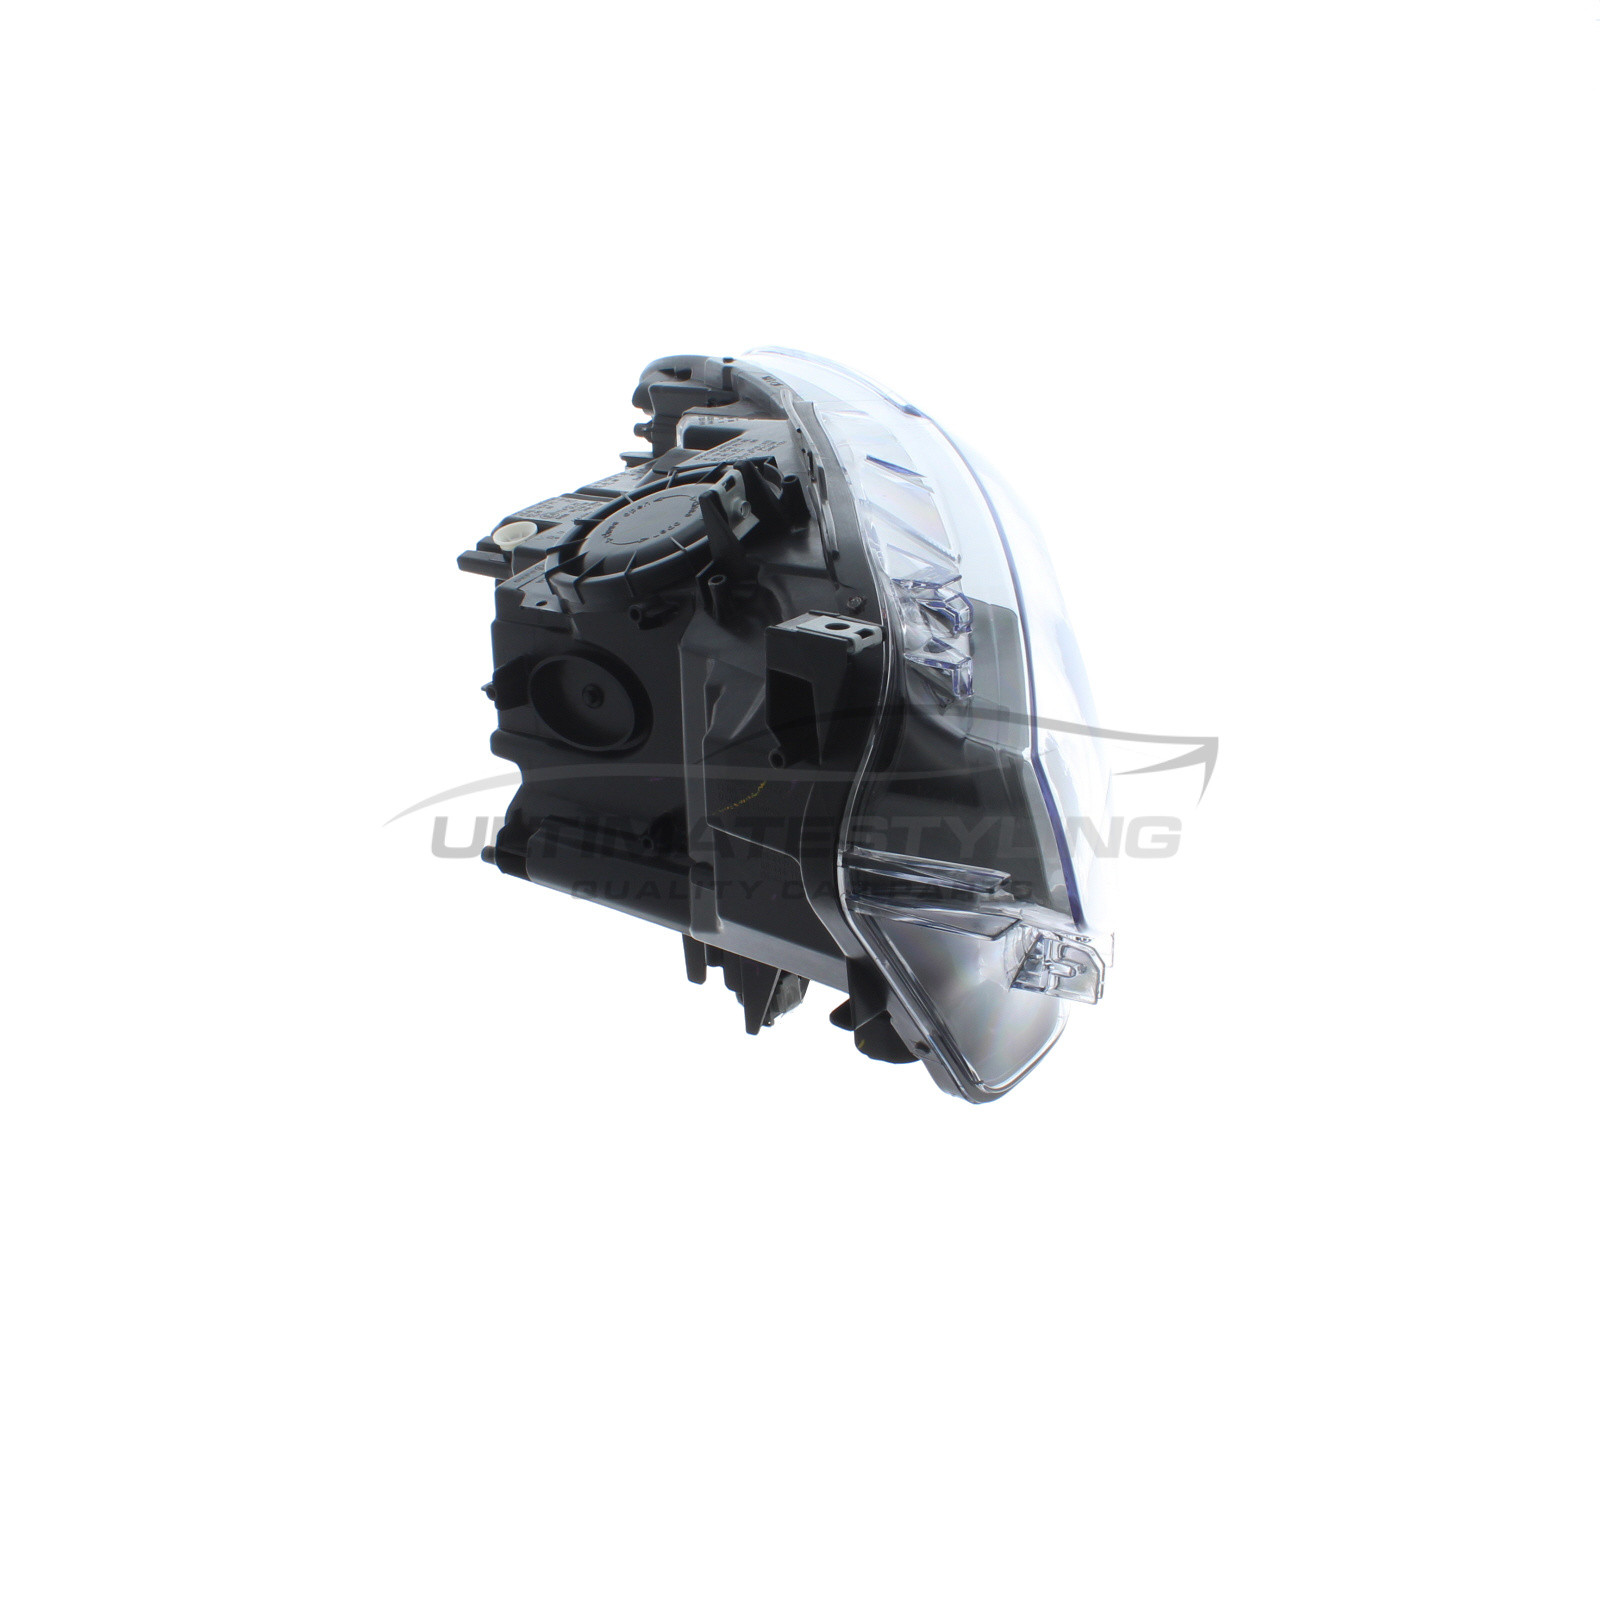 BMW 1 Series Headlight / Headlamp - Passenger Side (LH) - Halogen